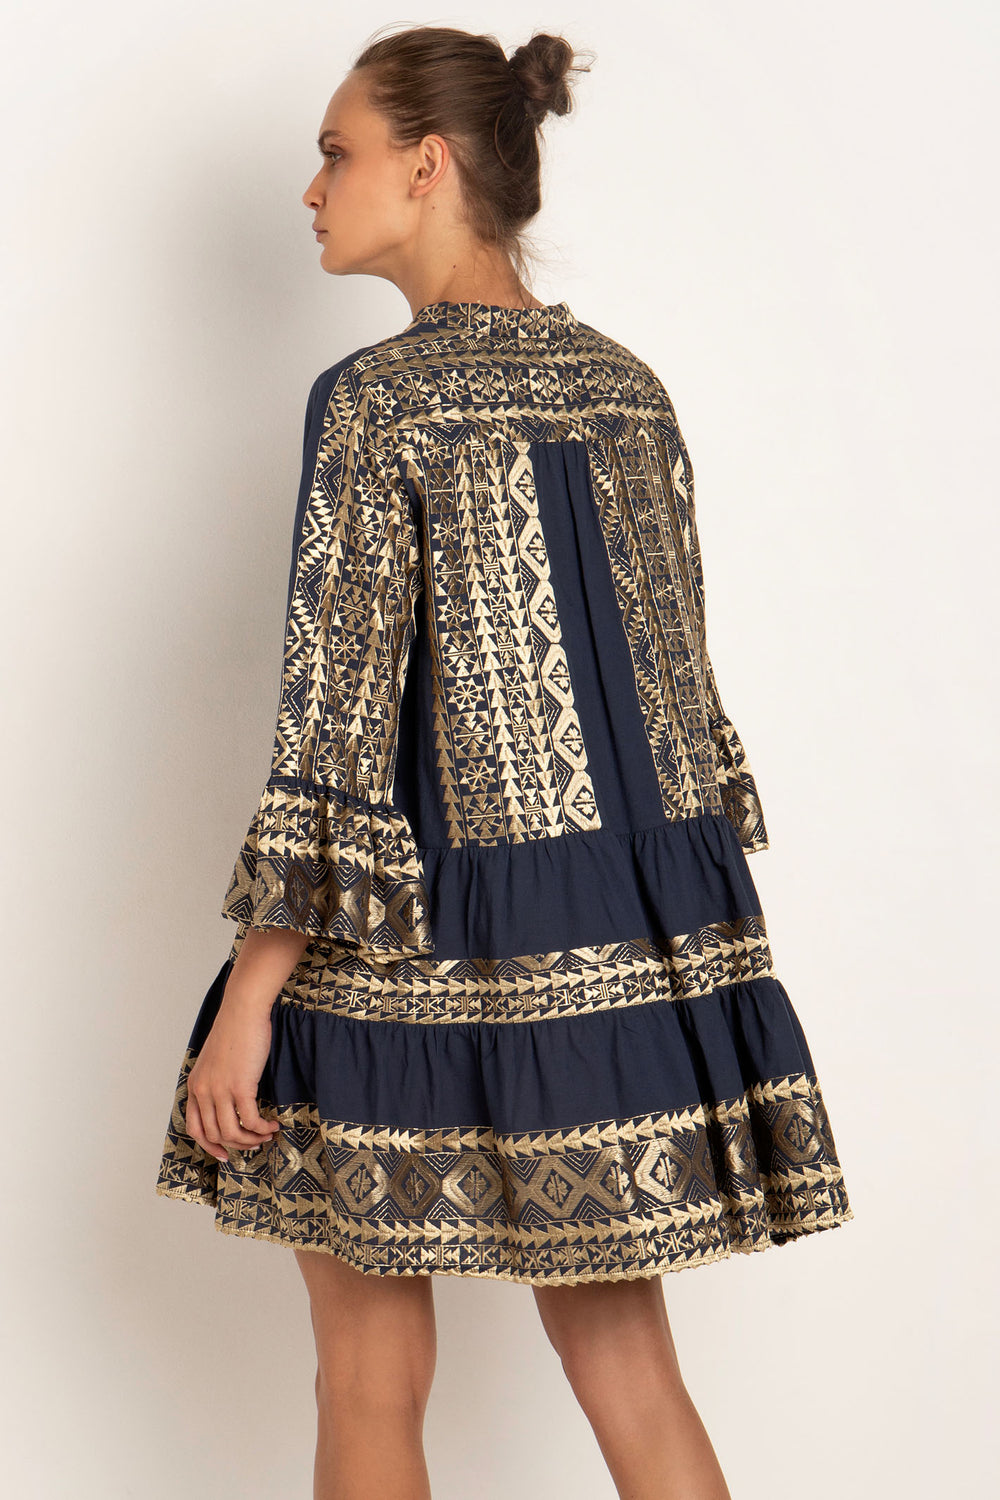 Greek Archaic Kori 330652 Navy Blue Total Short Cotton Dress - Olivia Grace Fashion